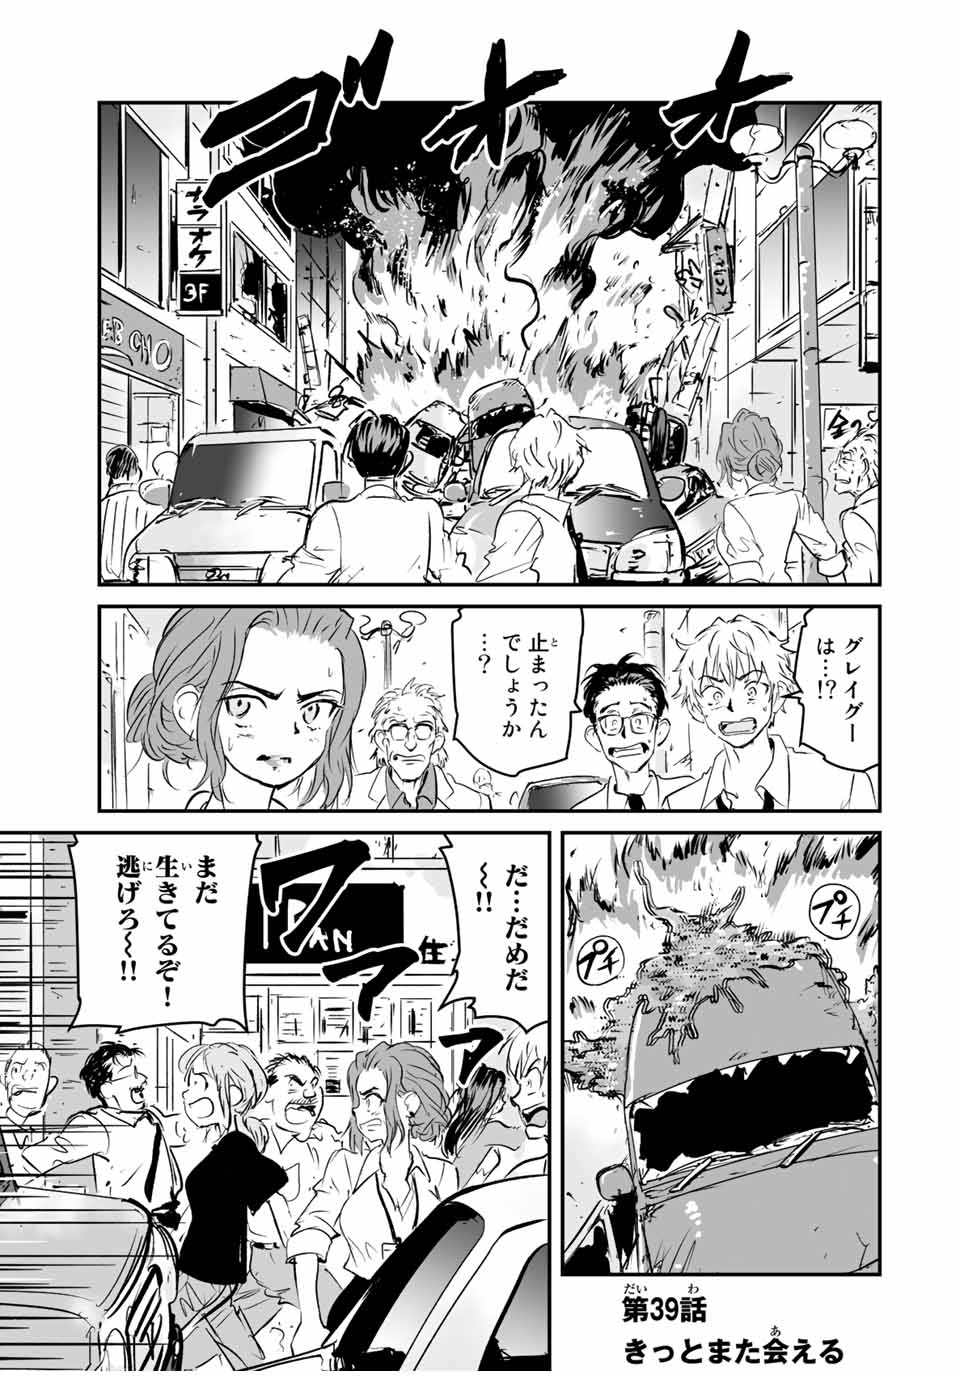 Manatsu no Grey Goo - Chapter 39 - Page 1